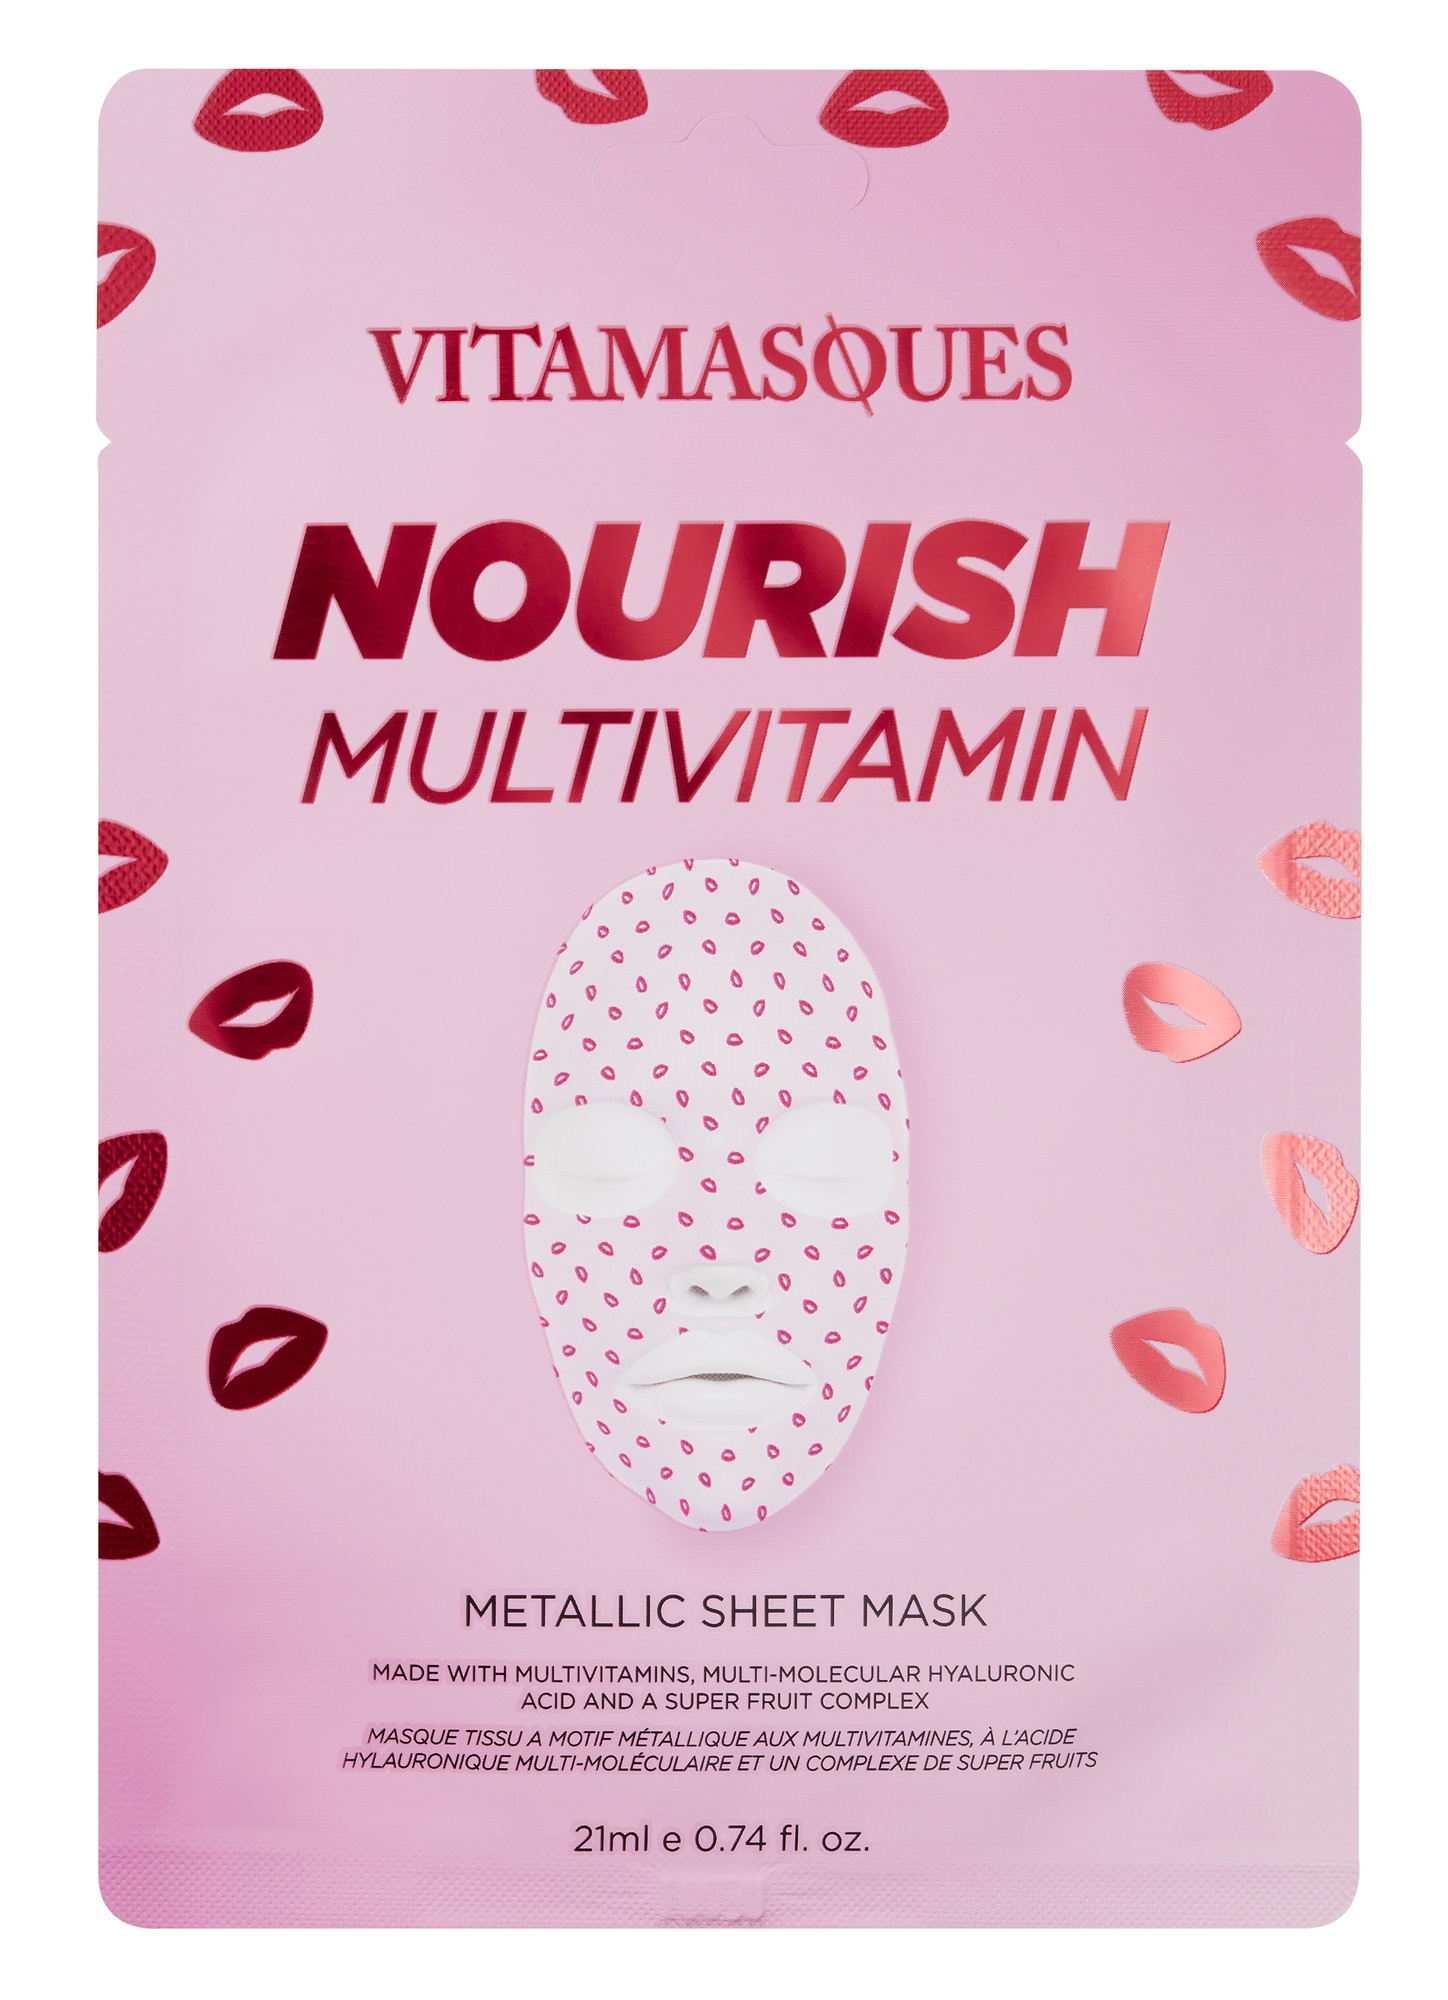 Vitamasques Nourish Multivitamin Metallic Sheet Mask